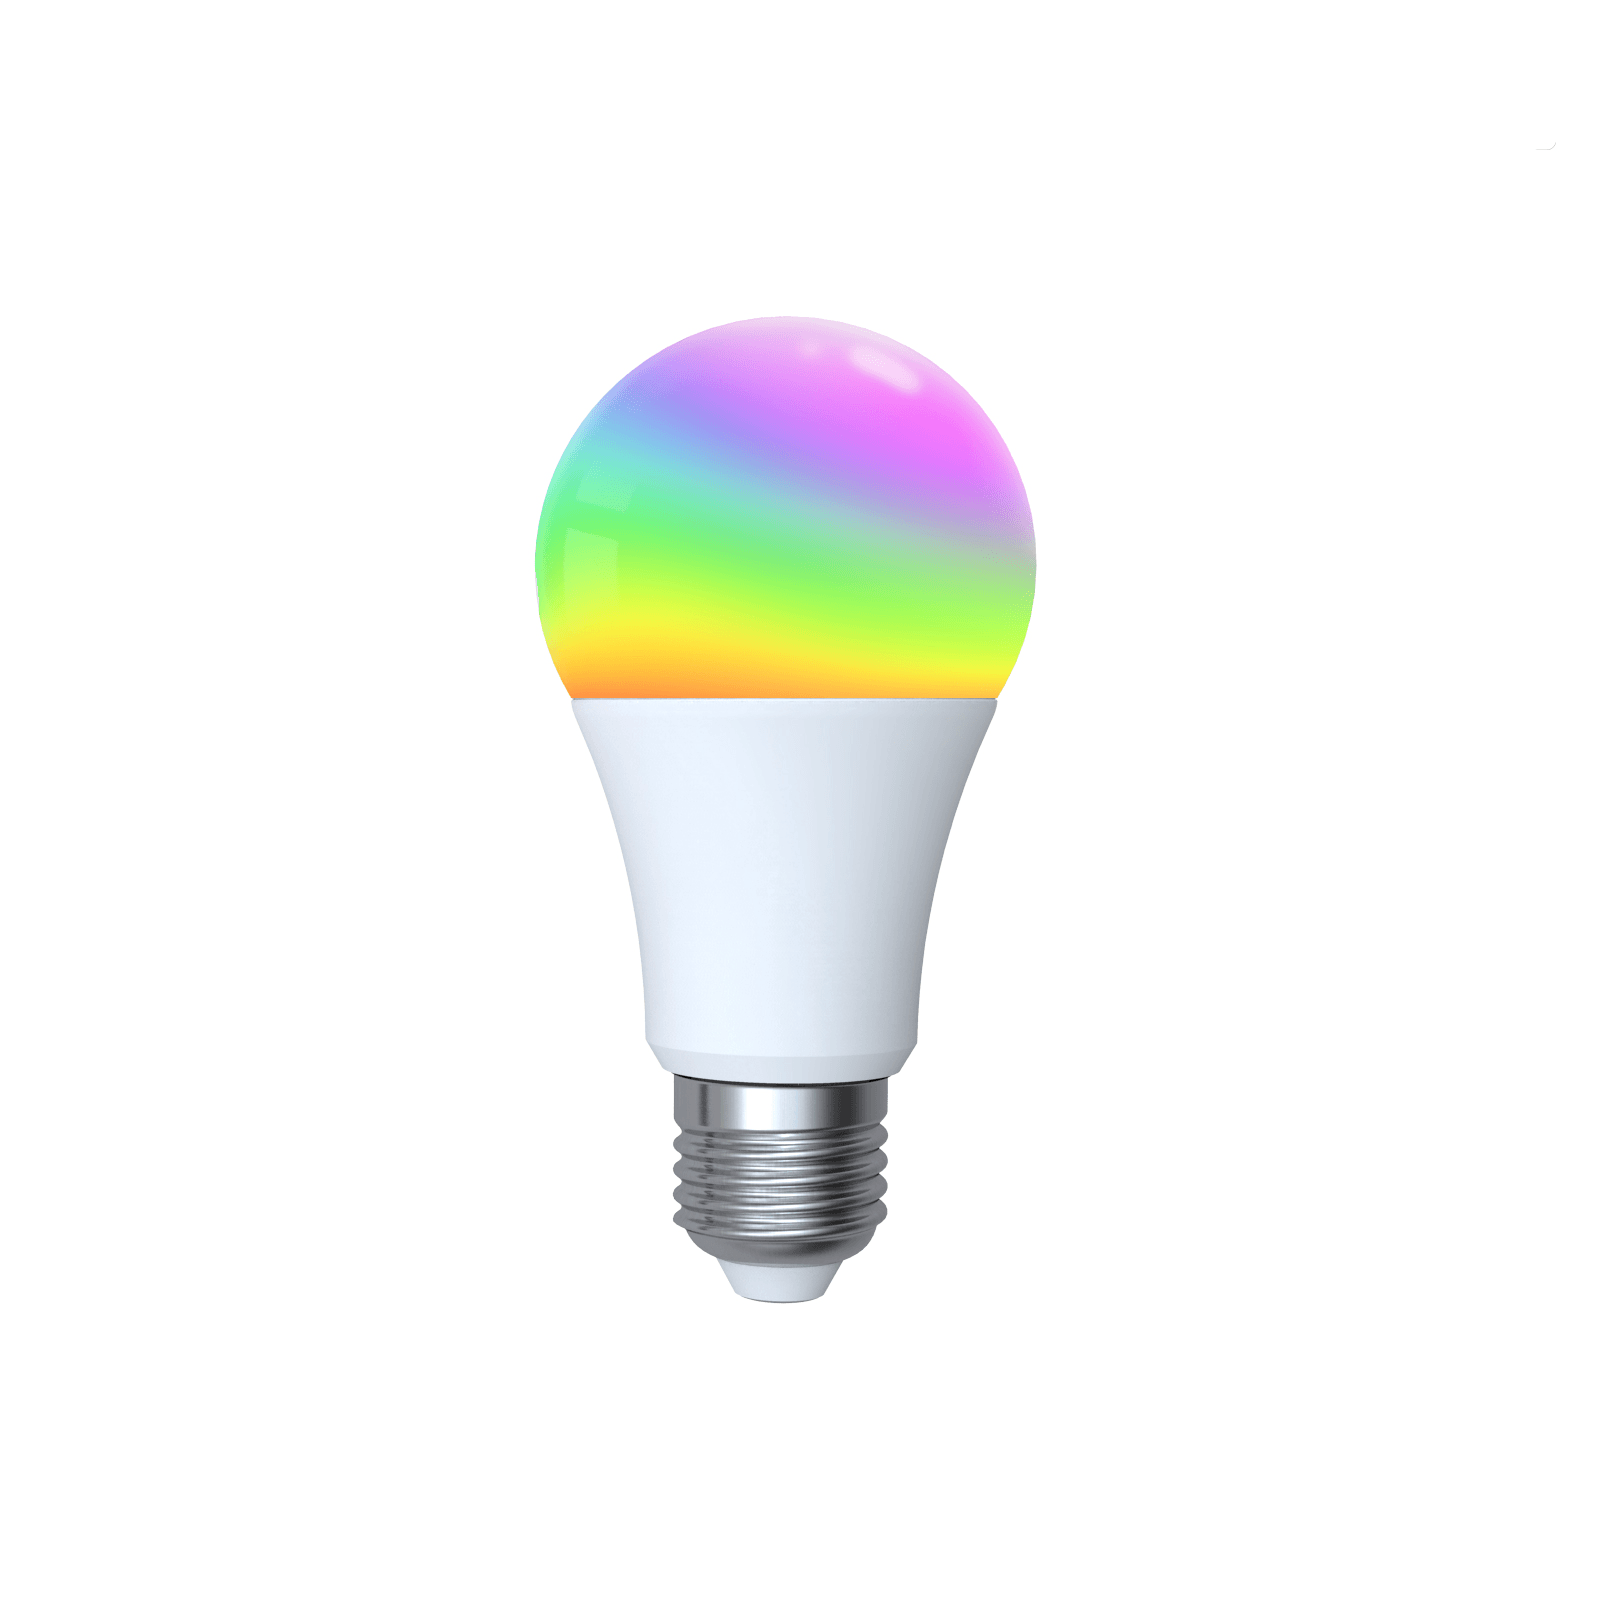 MOES WiFi Smart LED Light Bulb Dimmable Lamp 14W E27 Color Changea